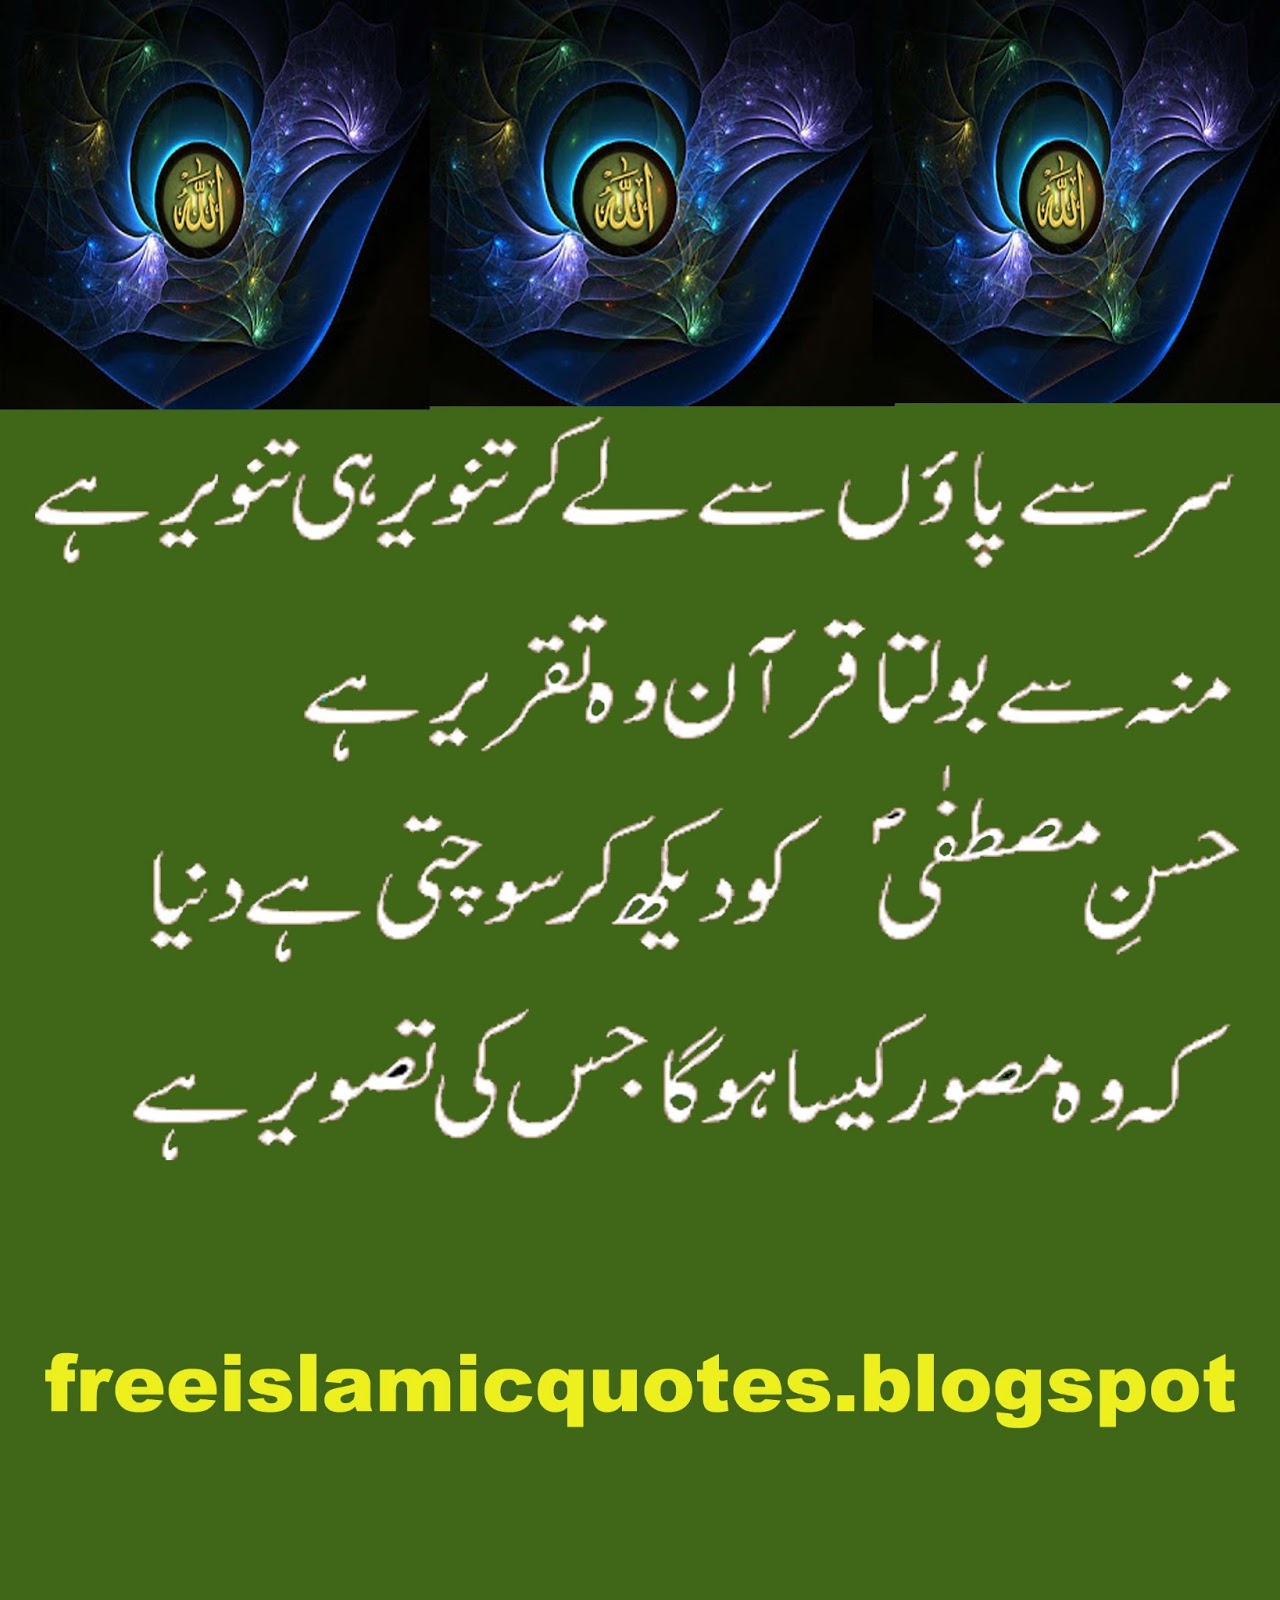 Islamic Quotes In Urdu Wallpapers: Free Download Beautiful Islamic ...